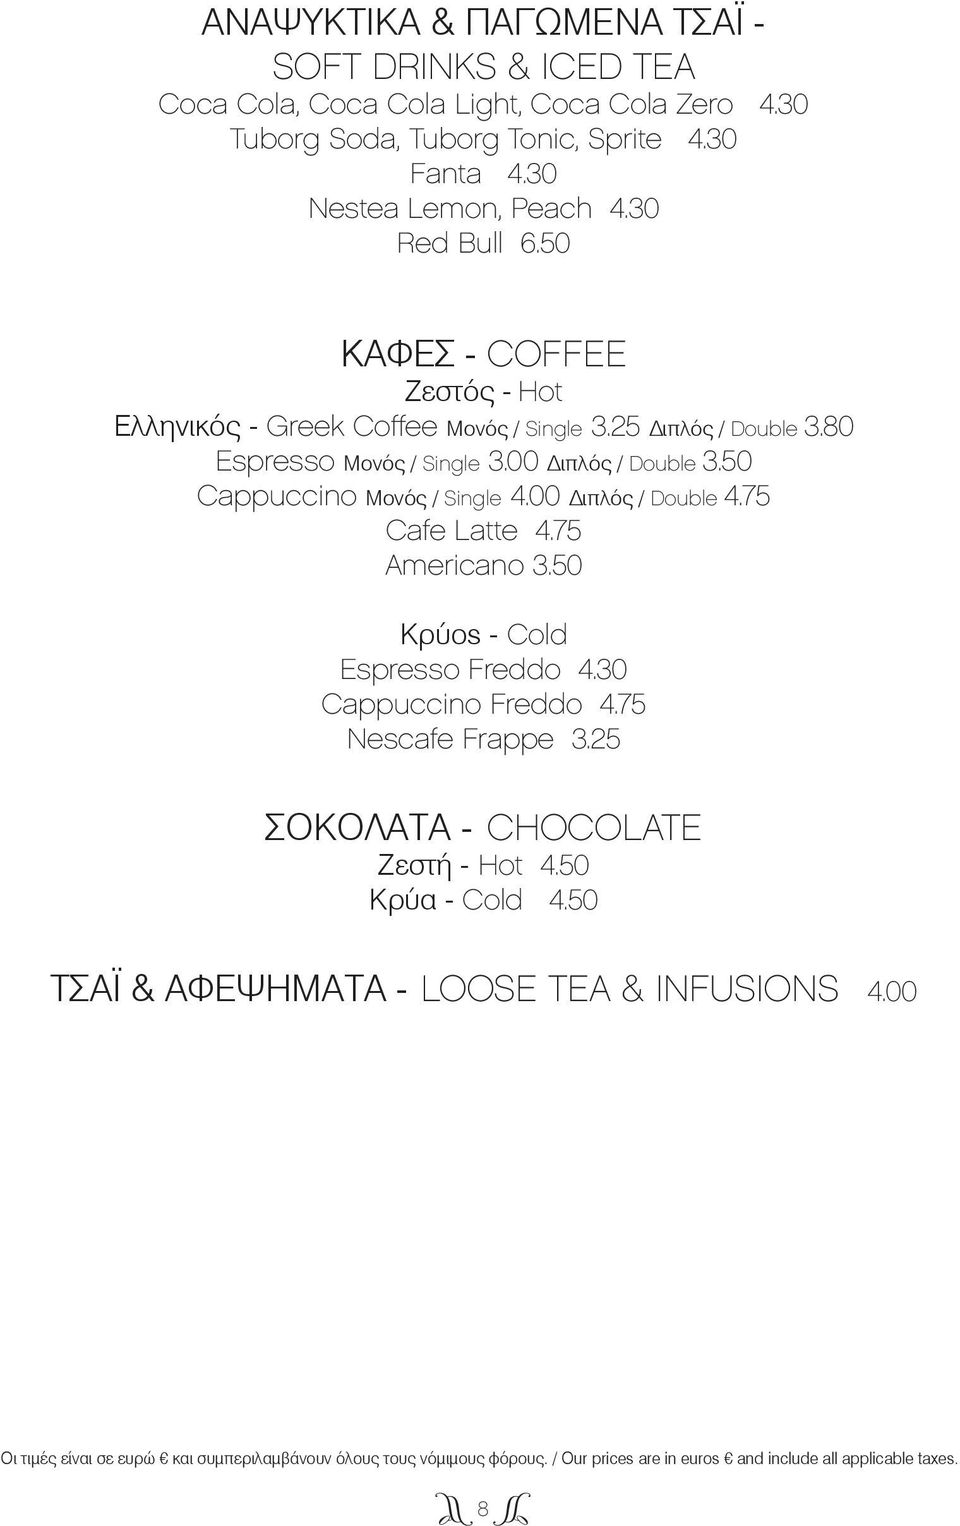 80 Espresso Μονός / Single 3.00 Διπλός / Double 3.50 Cappuccino Μονός / Single 4.00 Διπλός / Double 4.75 Cafe Latte 4.75 Americano 3.